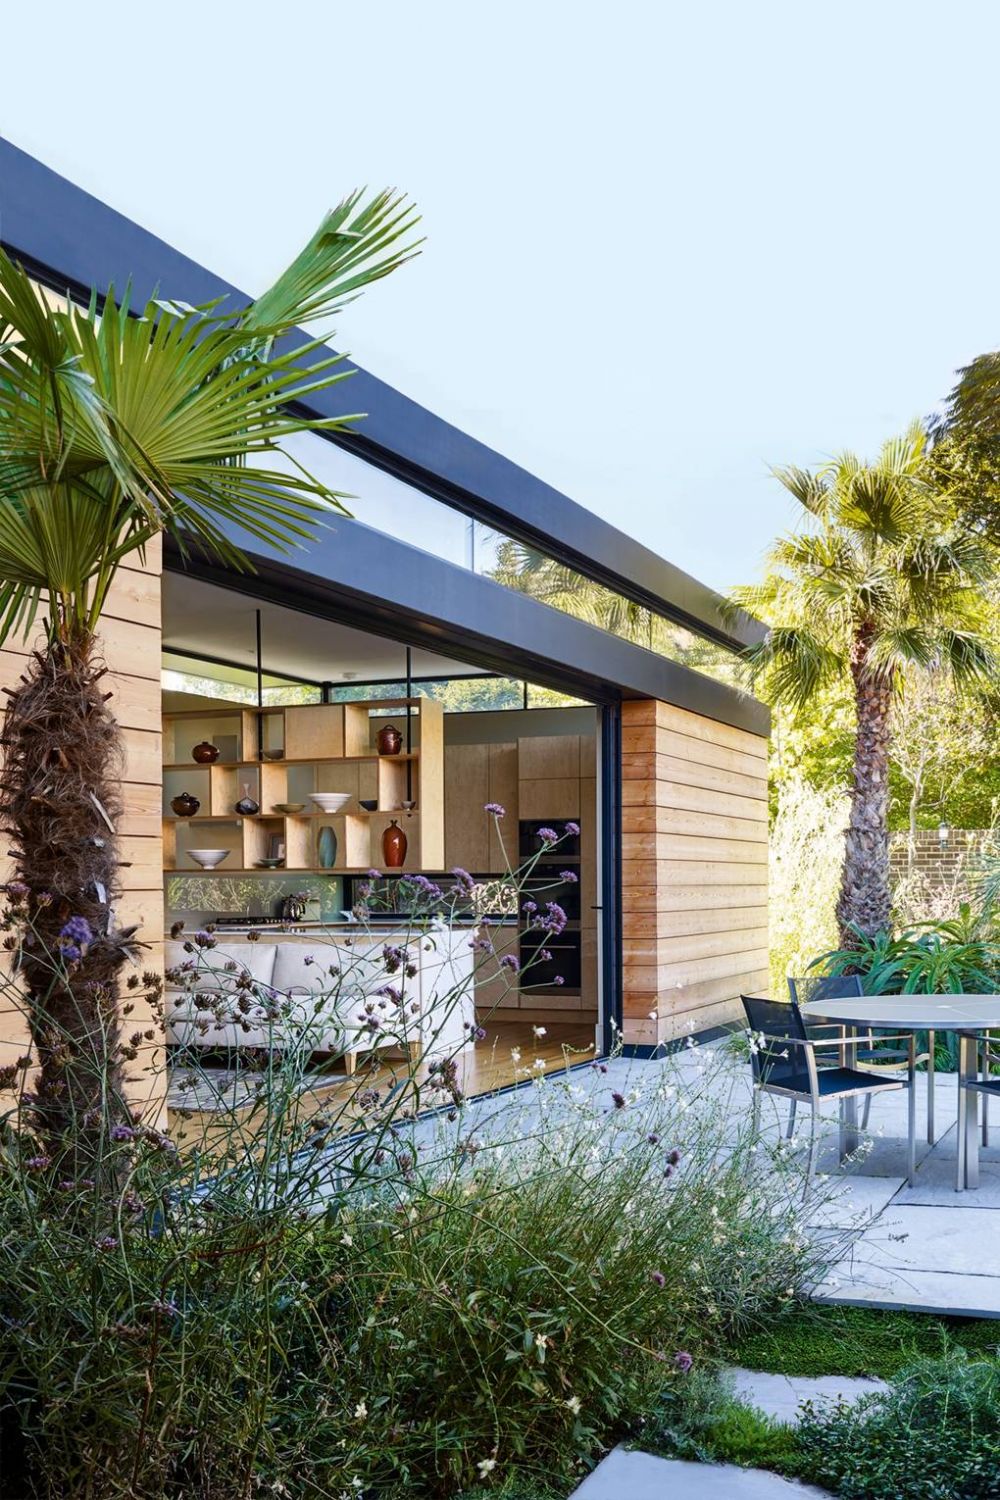 15 Desain ruang makan outdoor ini bikin suasana makin nyaman